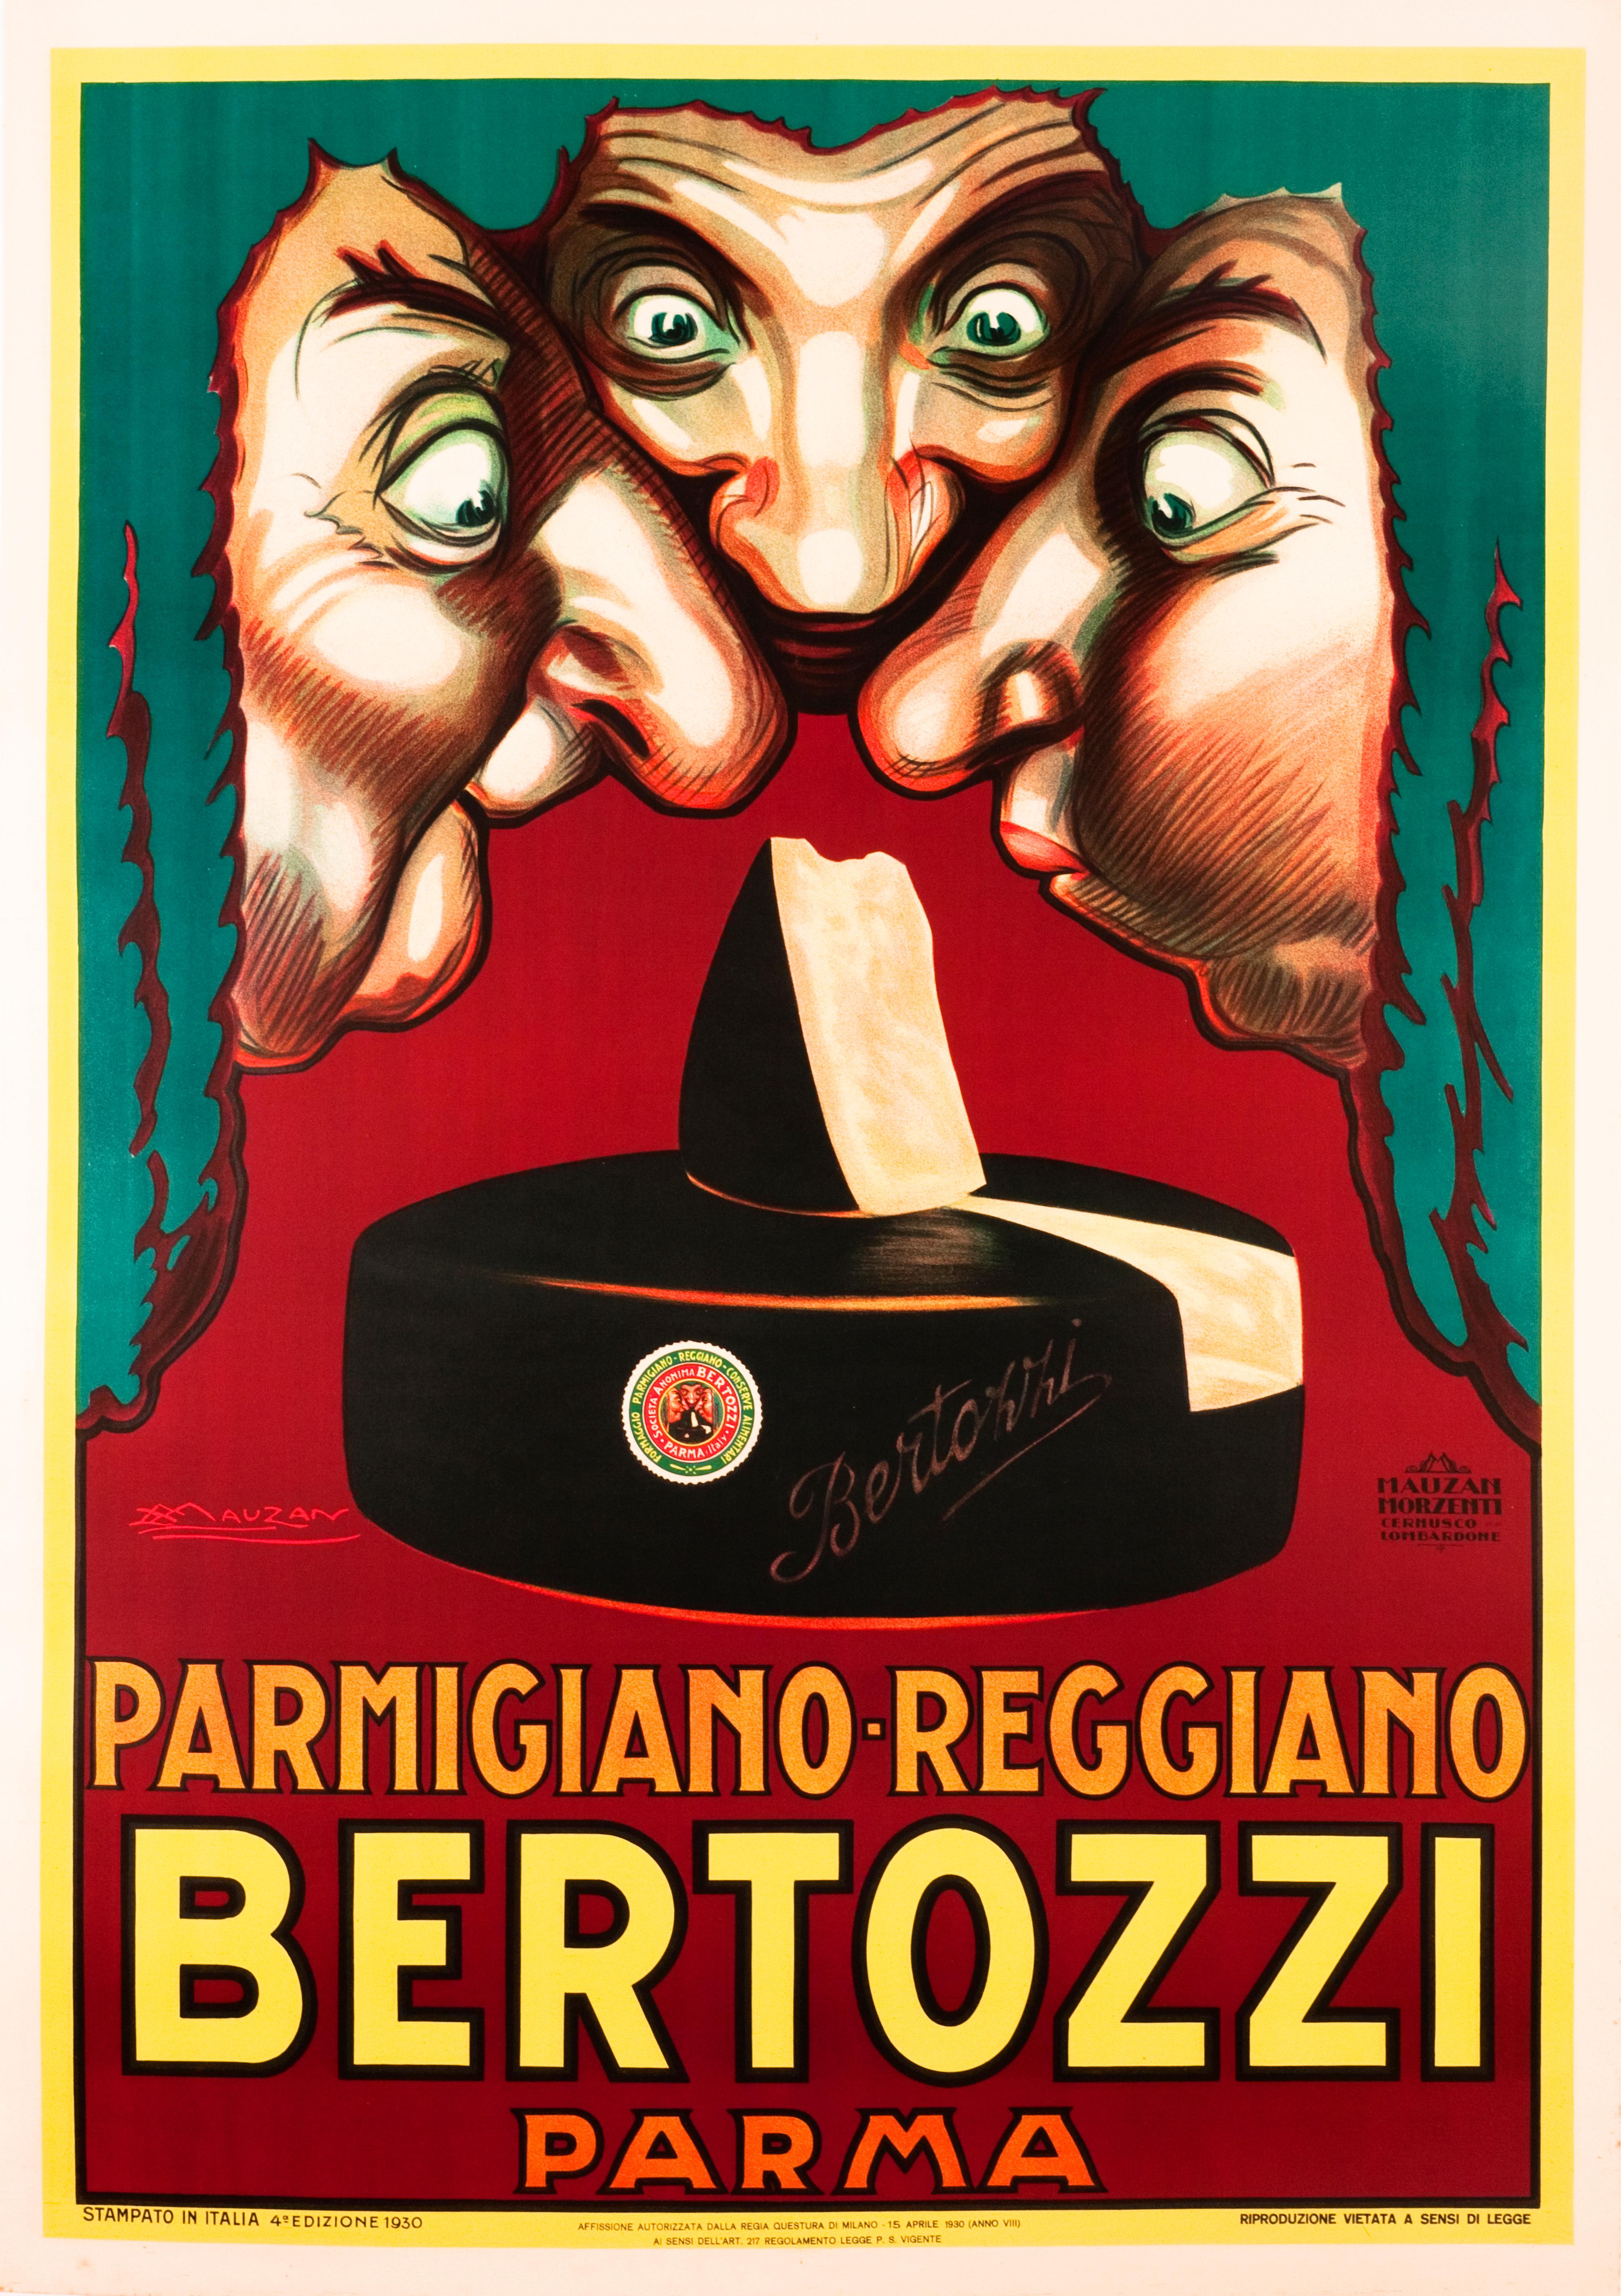 "Bertozzi Parmigiano-Reggiano" Original Vintage Food Cheese Poster - Print by Achille Luciano Mauzan